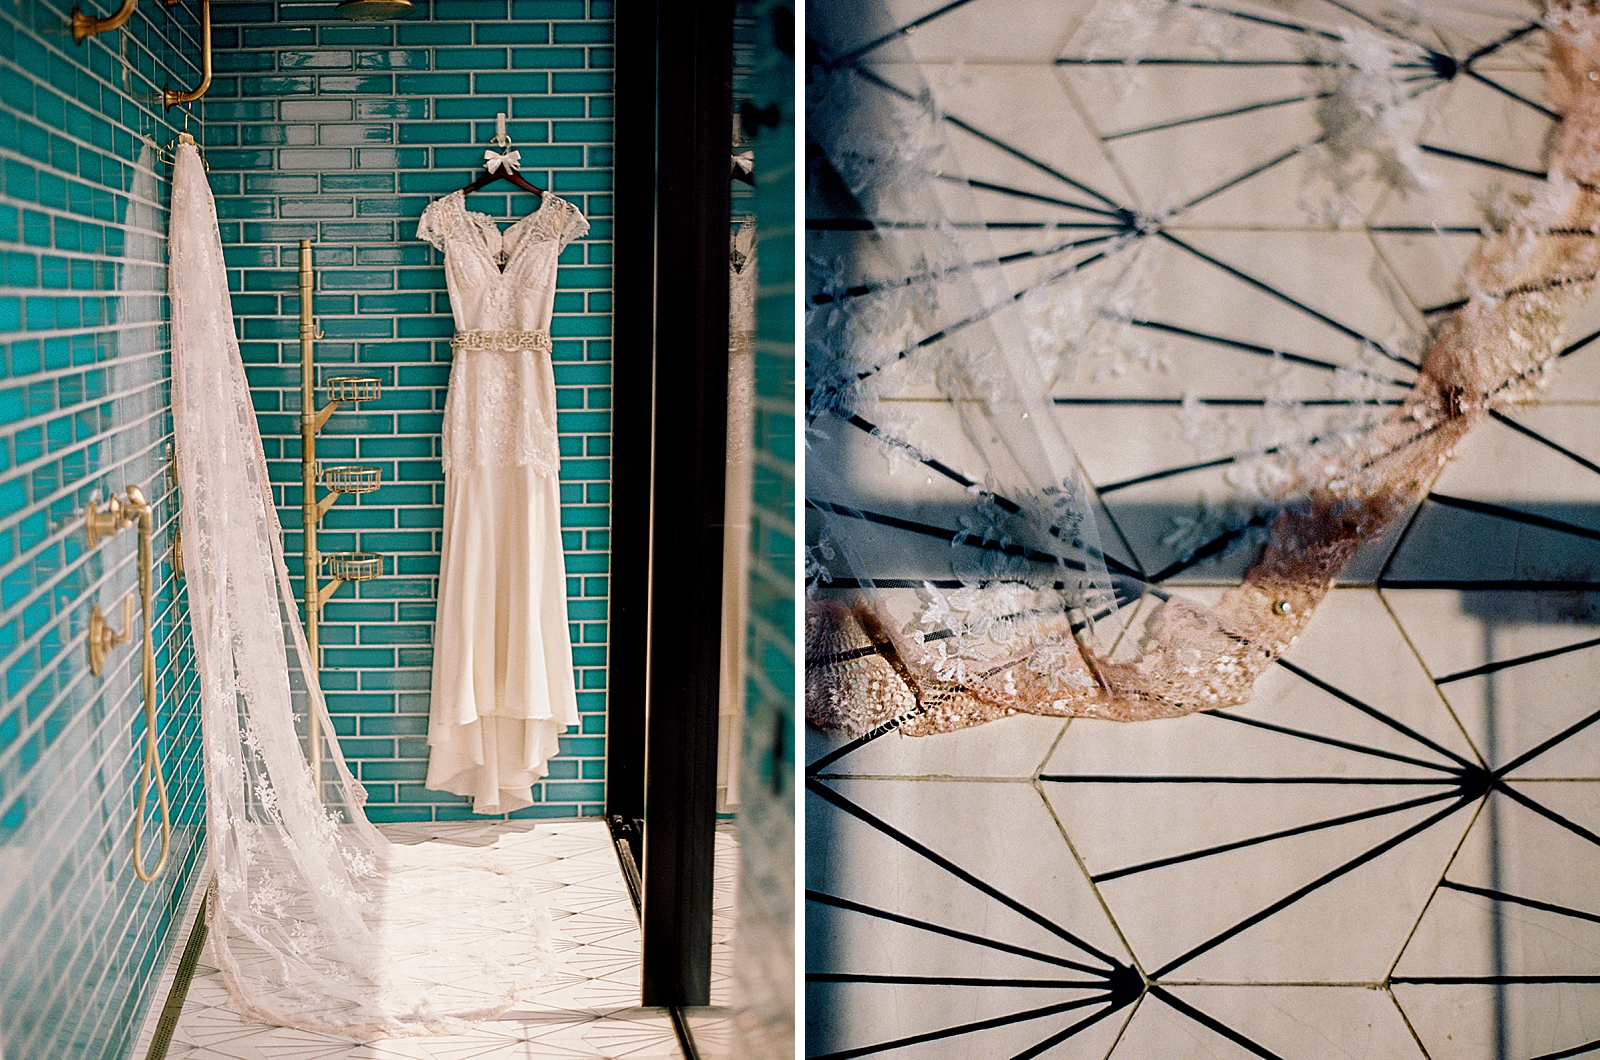 Left photo: Full shot of the bride's wedding gown. 
Right photo: Up close shot of the bride's veil. 